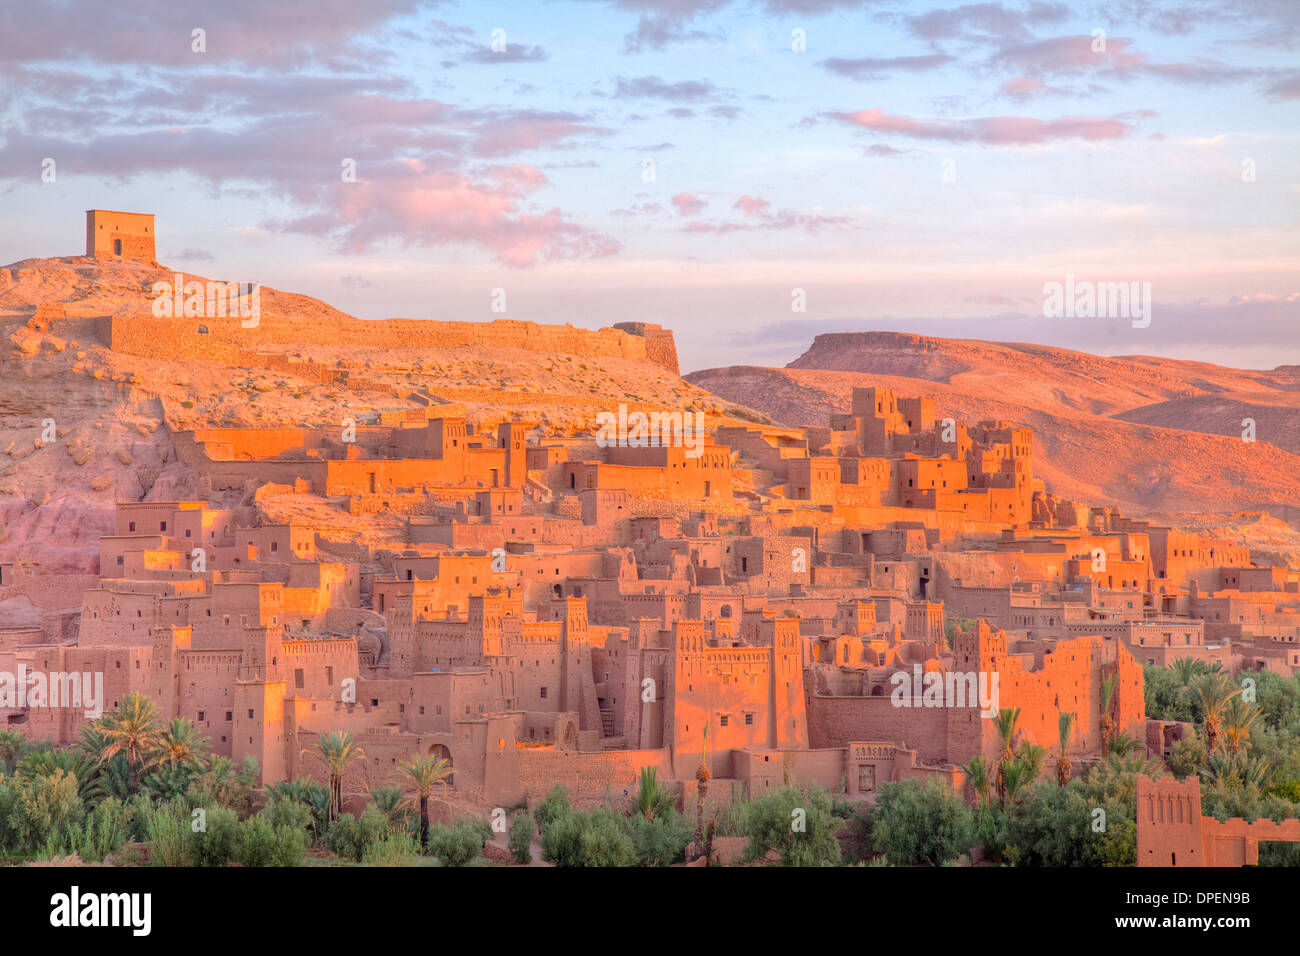 Ait Benhaddou, Morocco Ancient mud-brick kasbah, Sahara Desert 1,000 year old caravanserai, UNESCO World Heritage Site Stock Photo